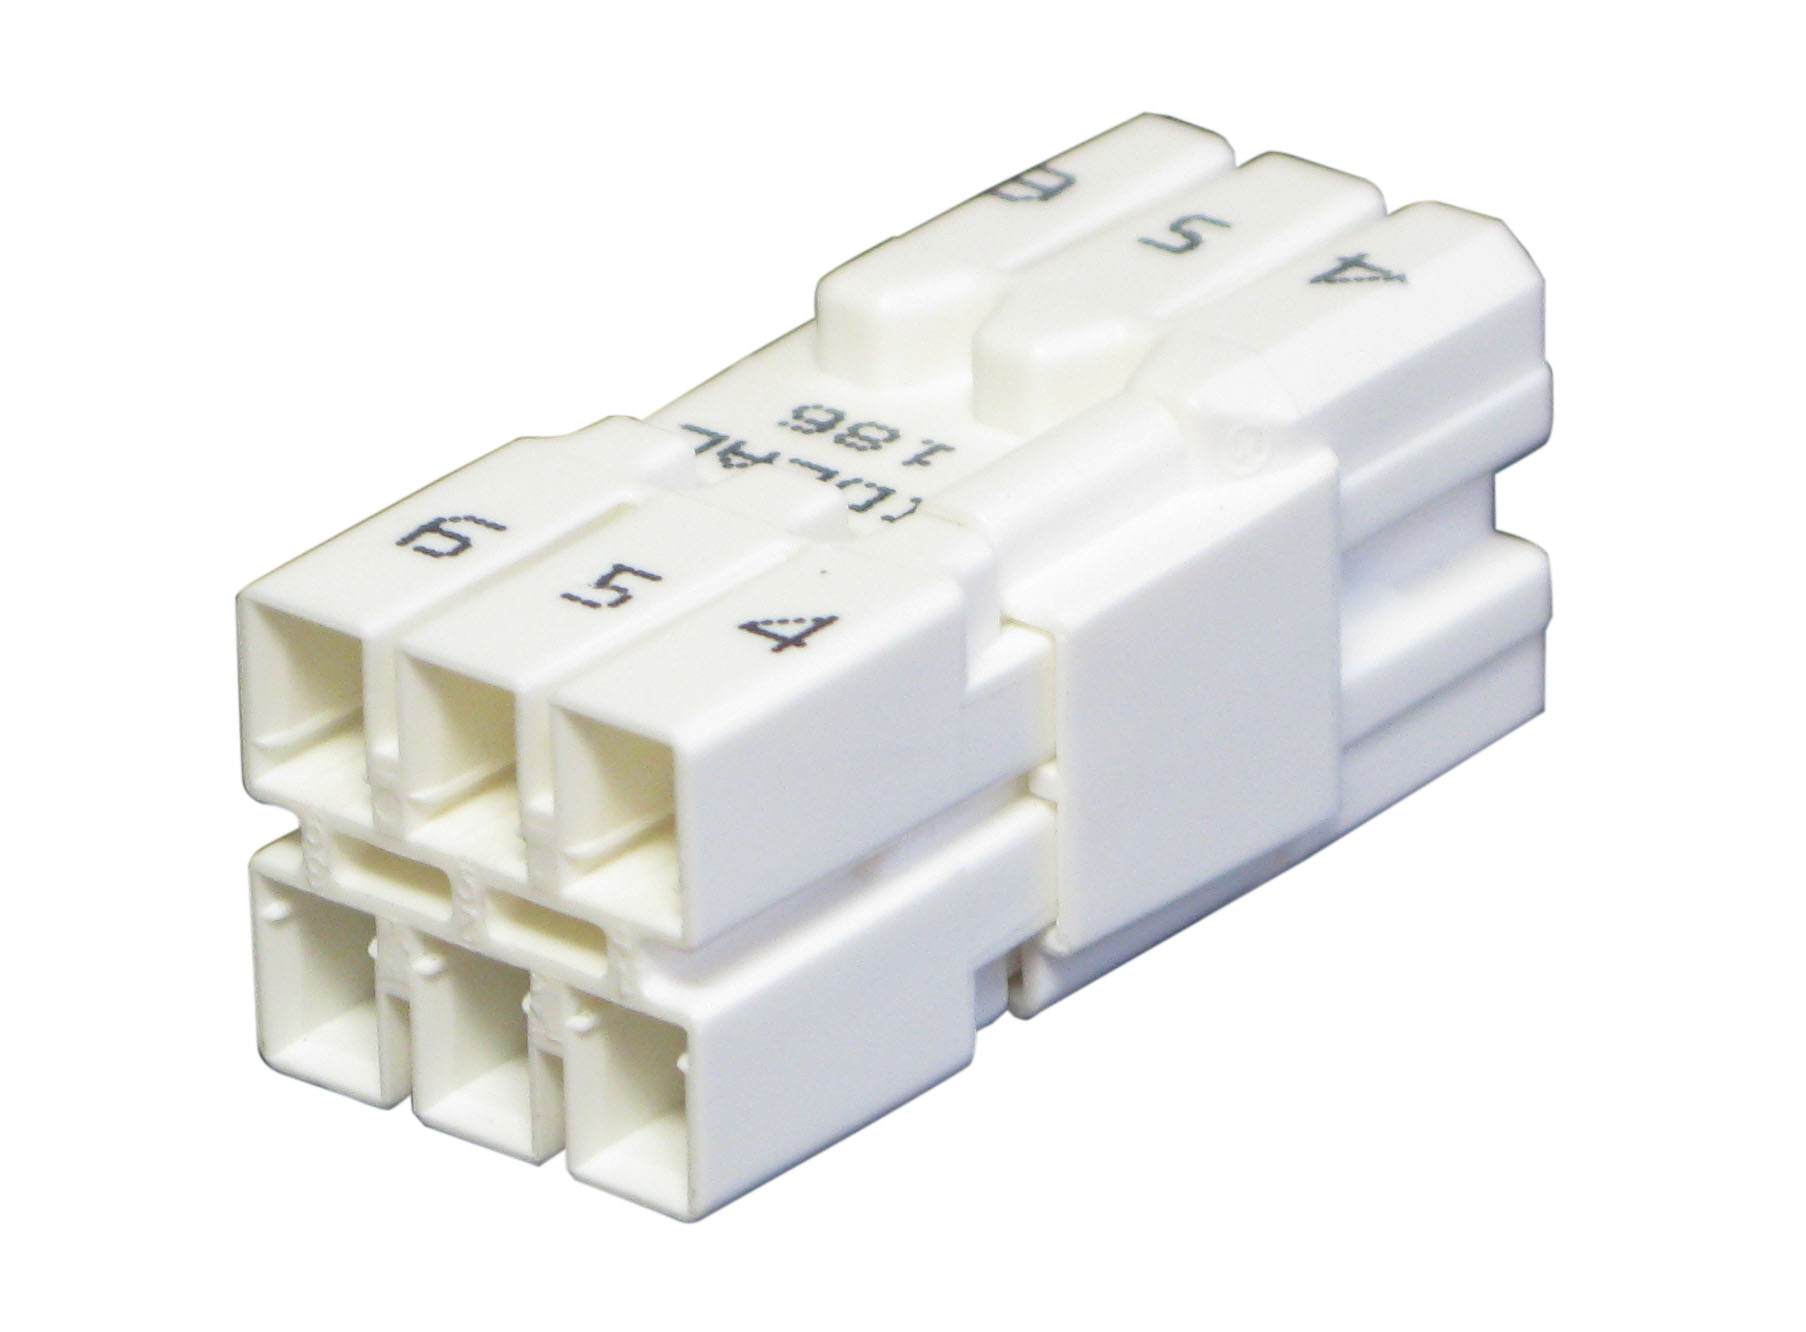 PowerPlug® Luminaire Disconnect, Model 186 Female, Box of 2,000